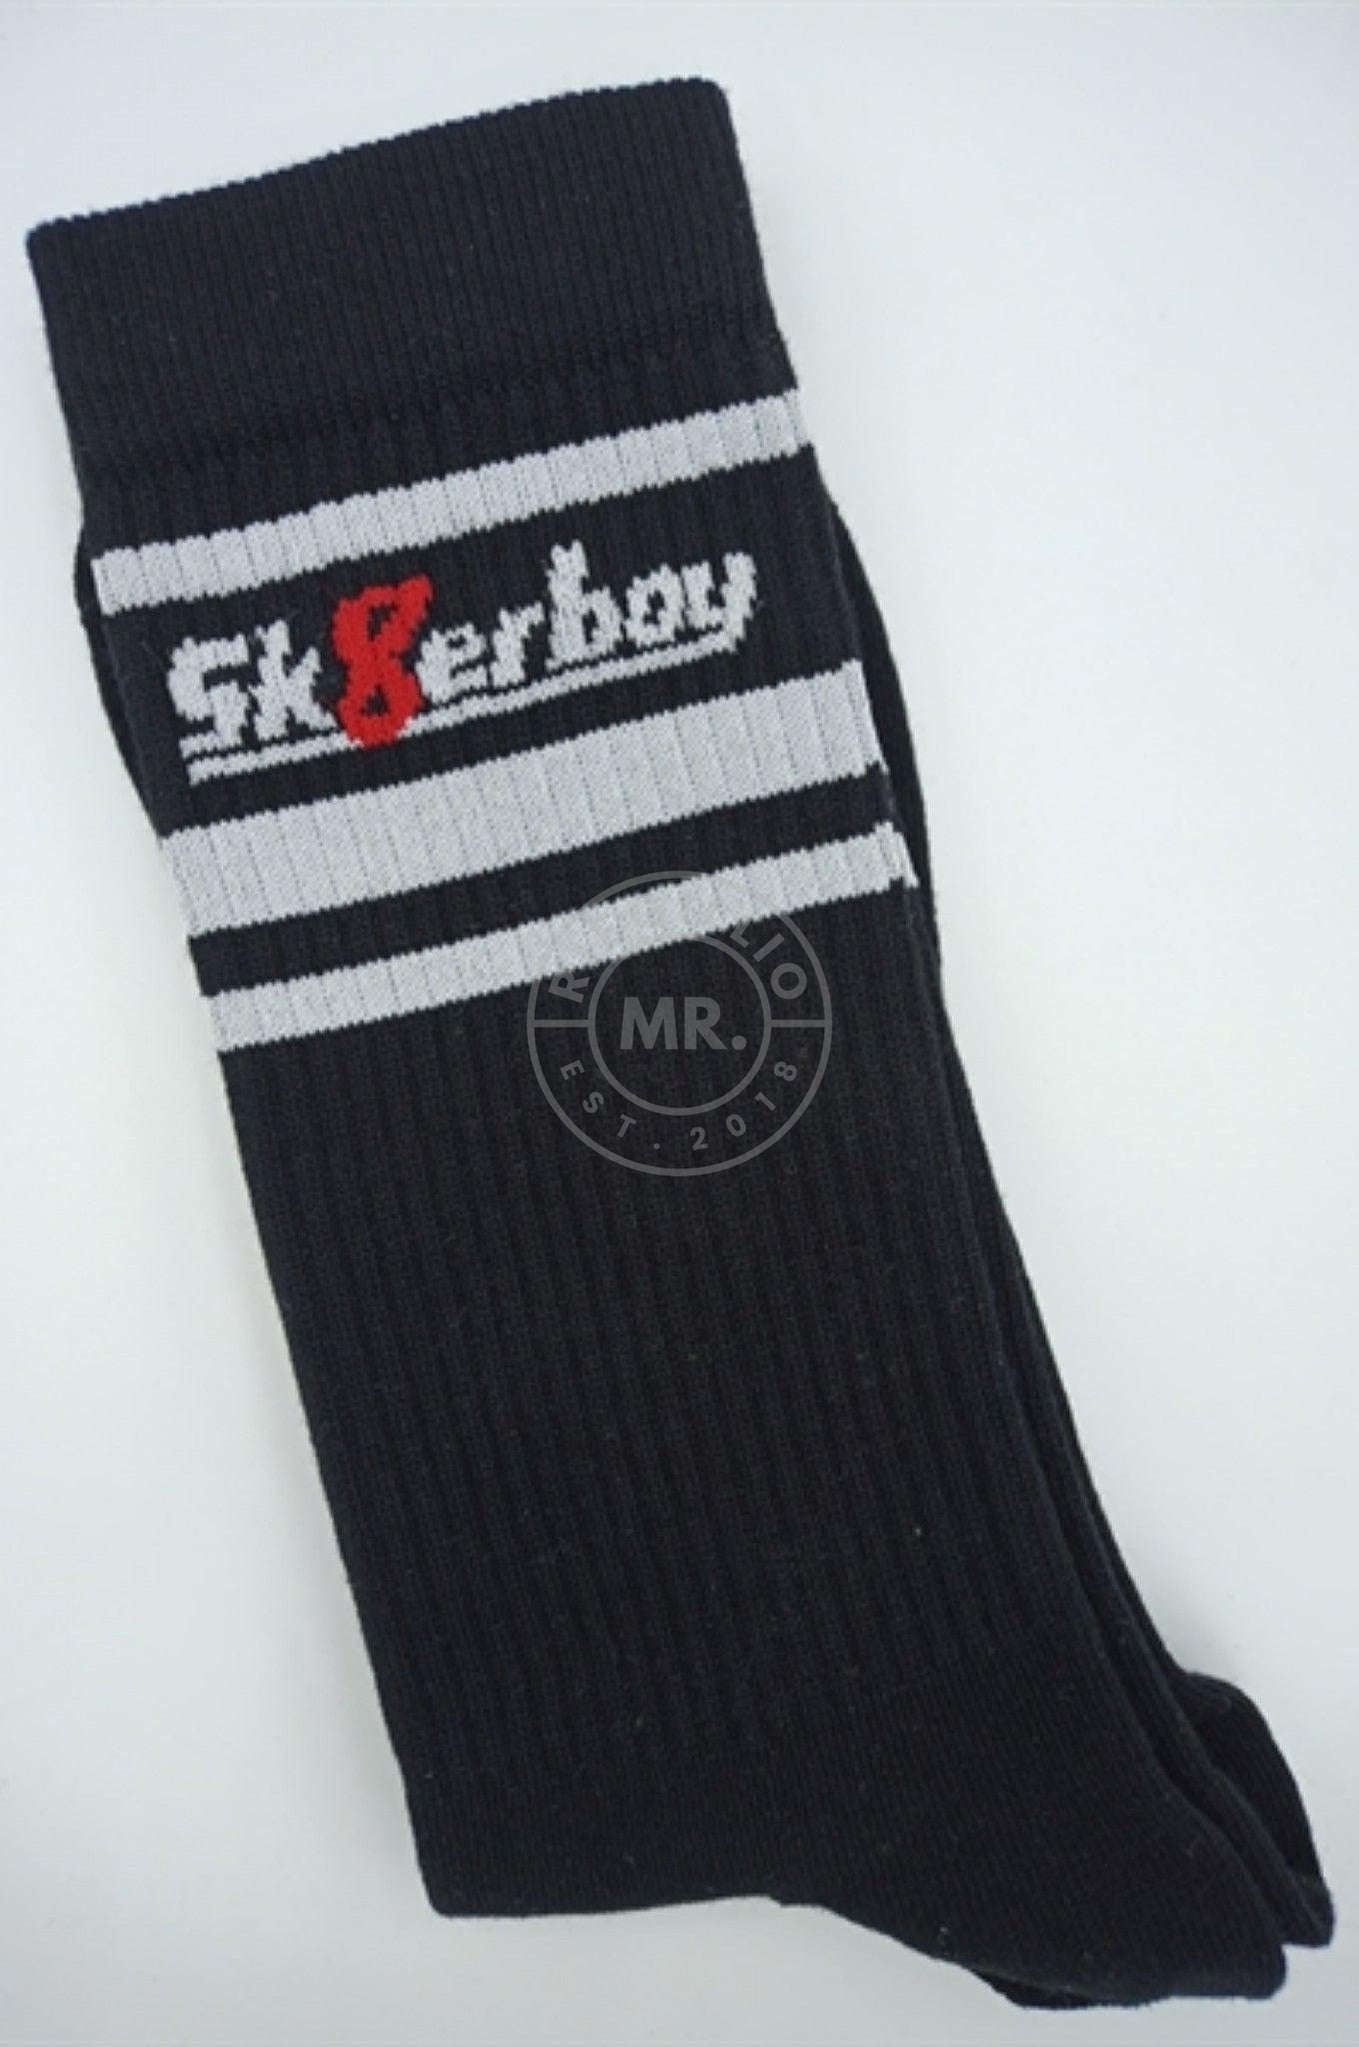 Sk8erboy VICTORY Socks - Black *DISCONTINUED ITEM* at MR. Riegillio